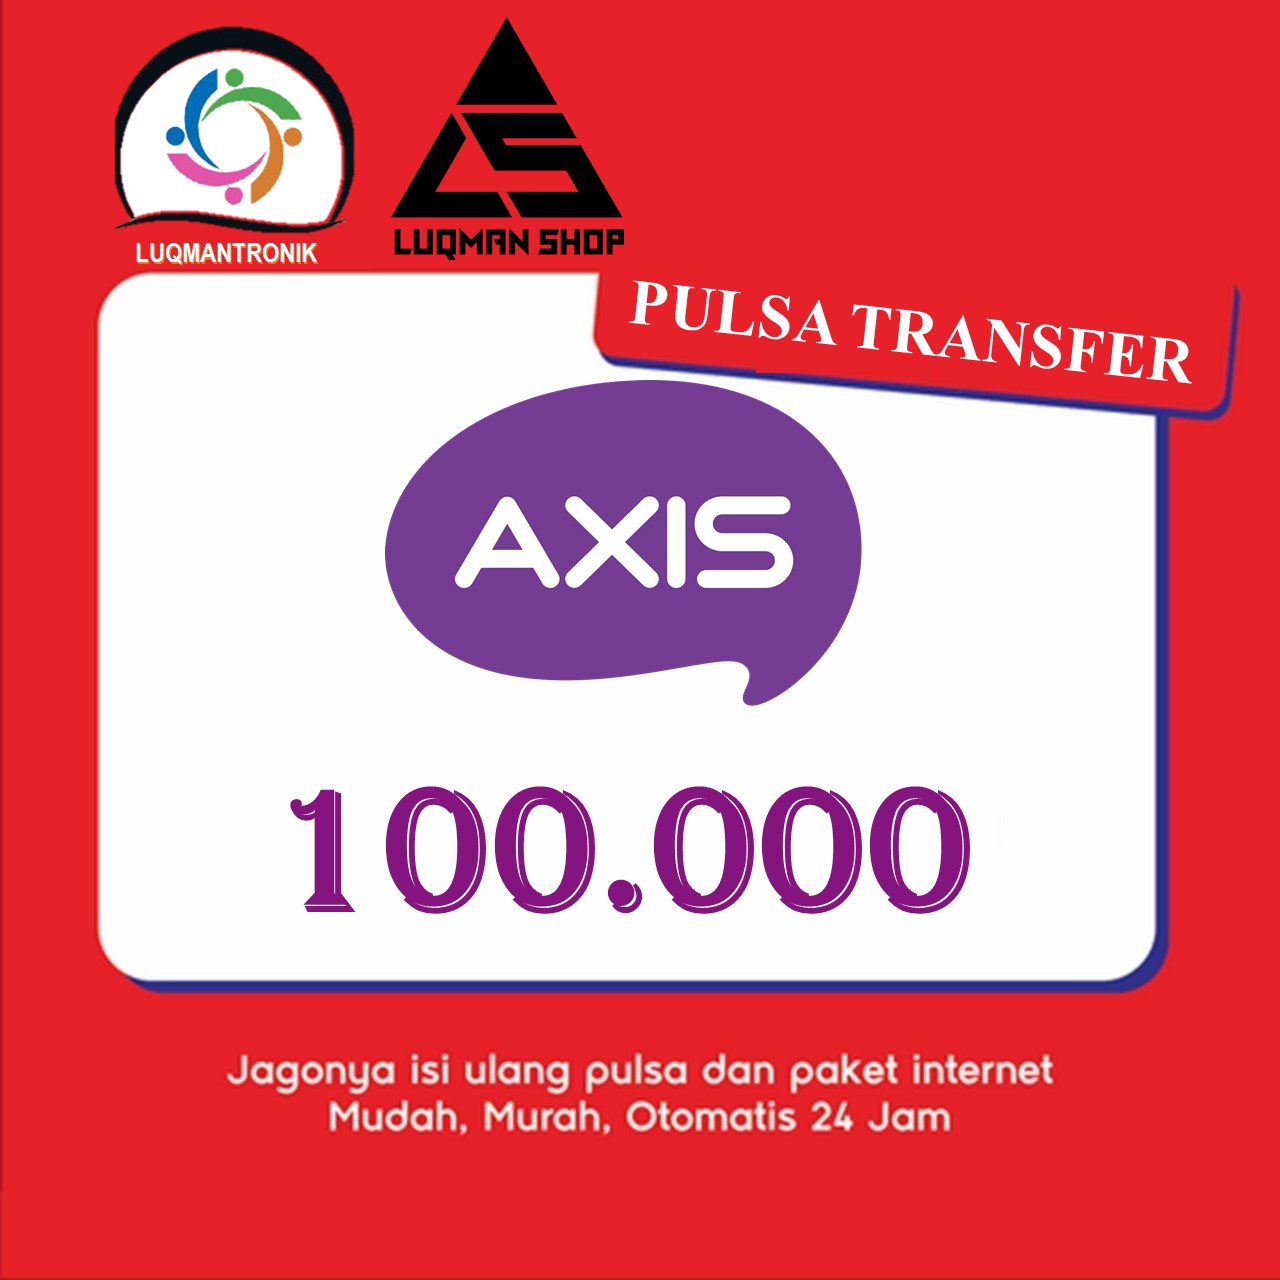 PULSA TRANSFER AXIS - PULSA TRANSFER AXIS 100.000